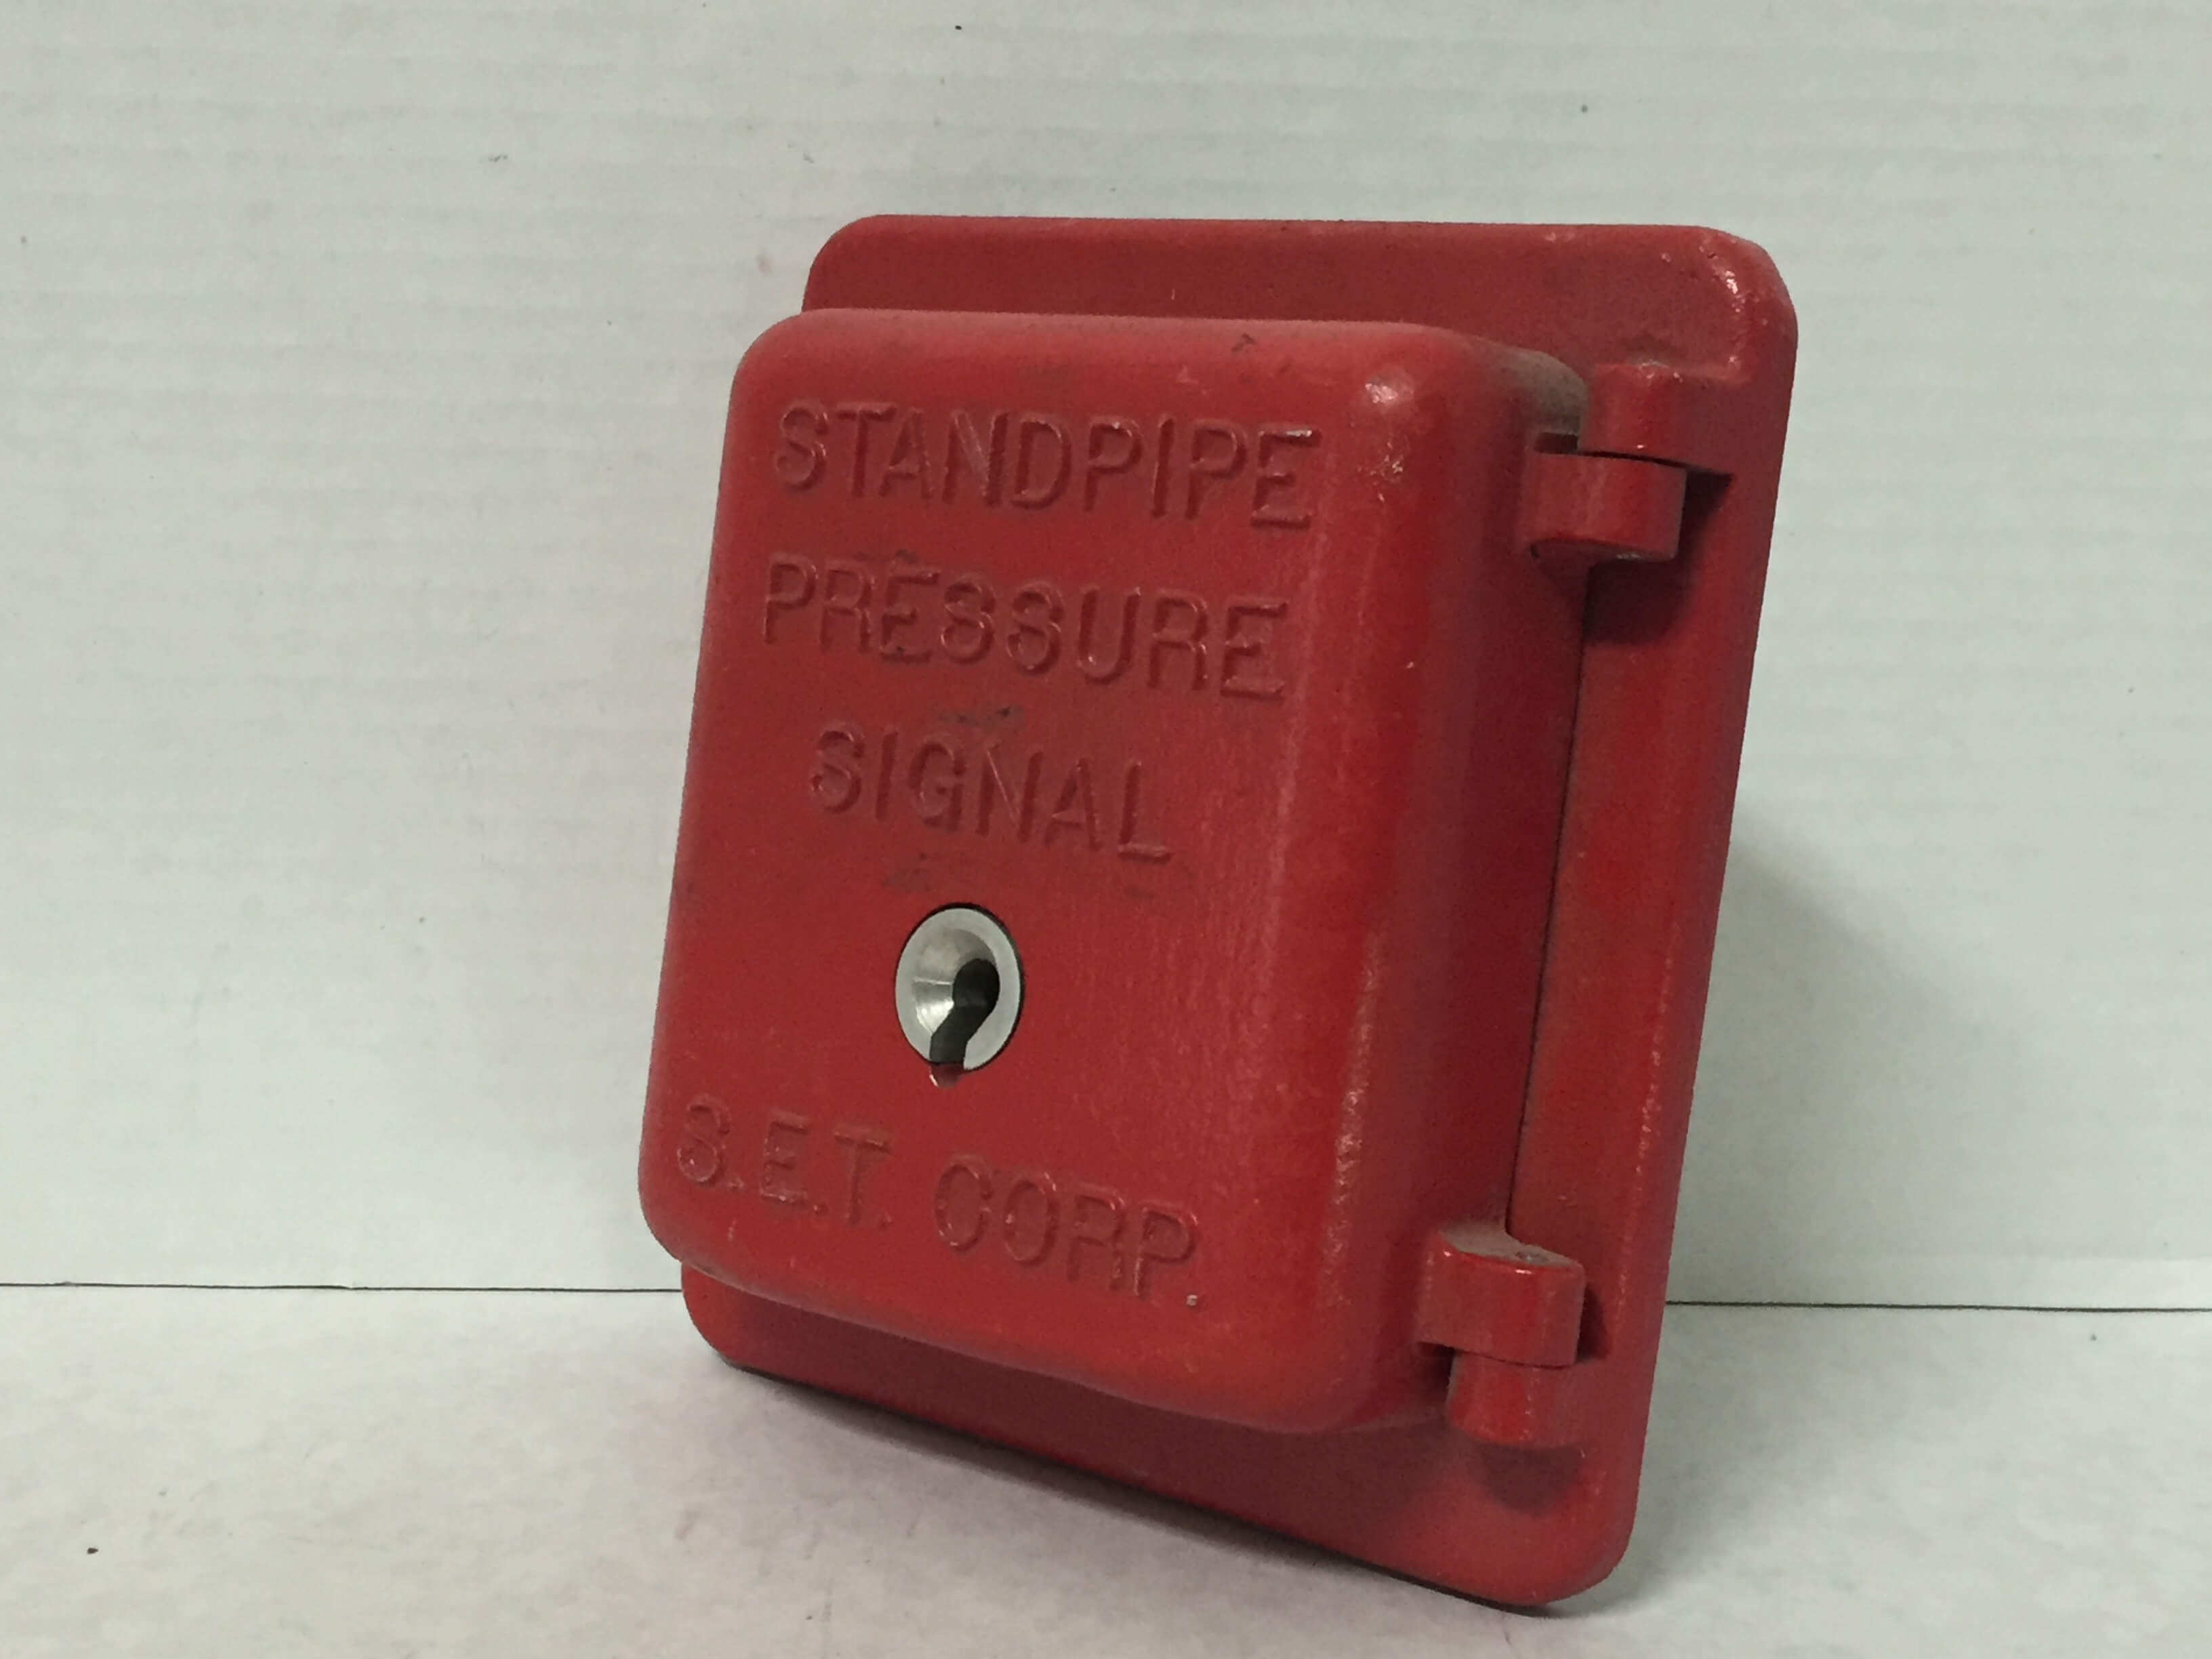 SET Standpipe Pressure Signal